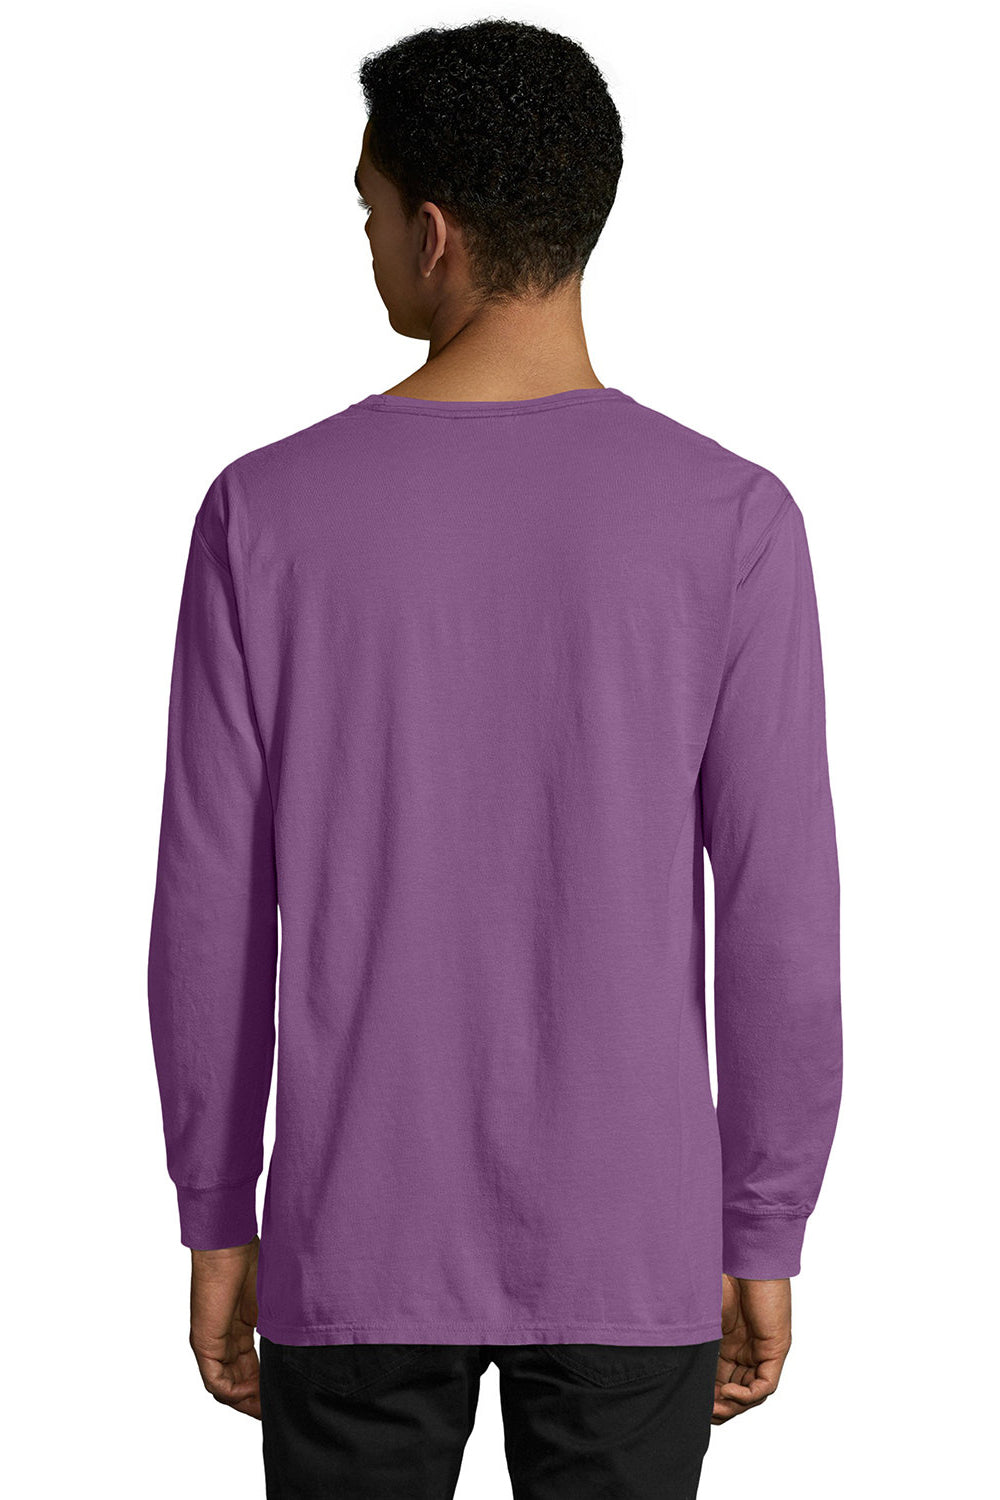 ComfortWash by Hanes GDH200 Mens Long Sleeve Crewneck T-Shirt Purple Plum Raisin Back